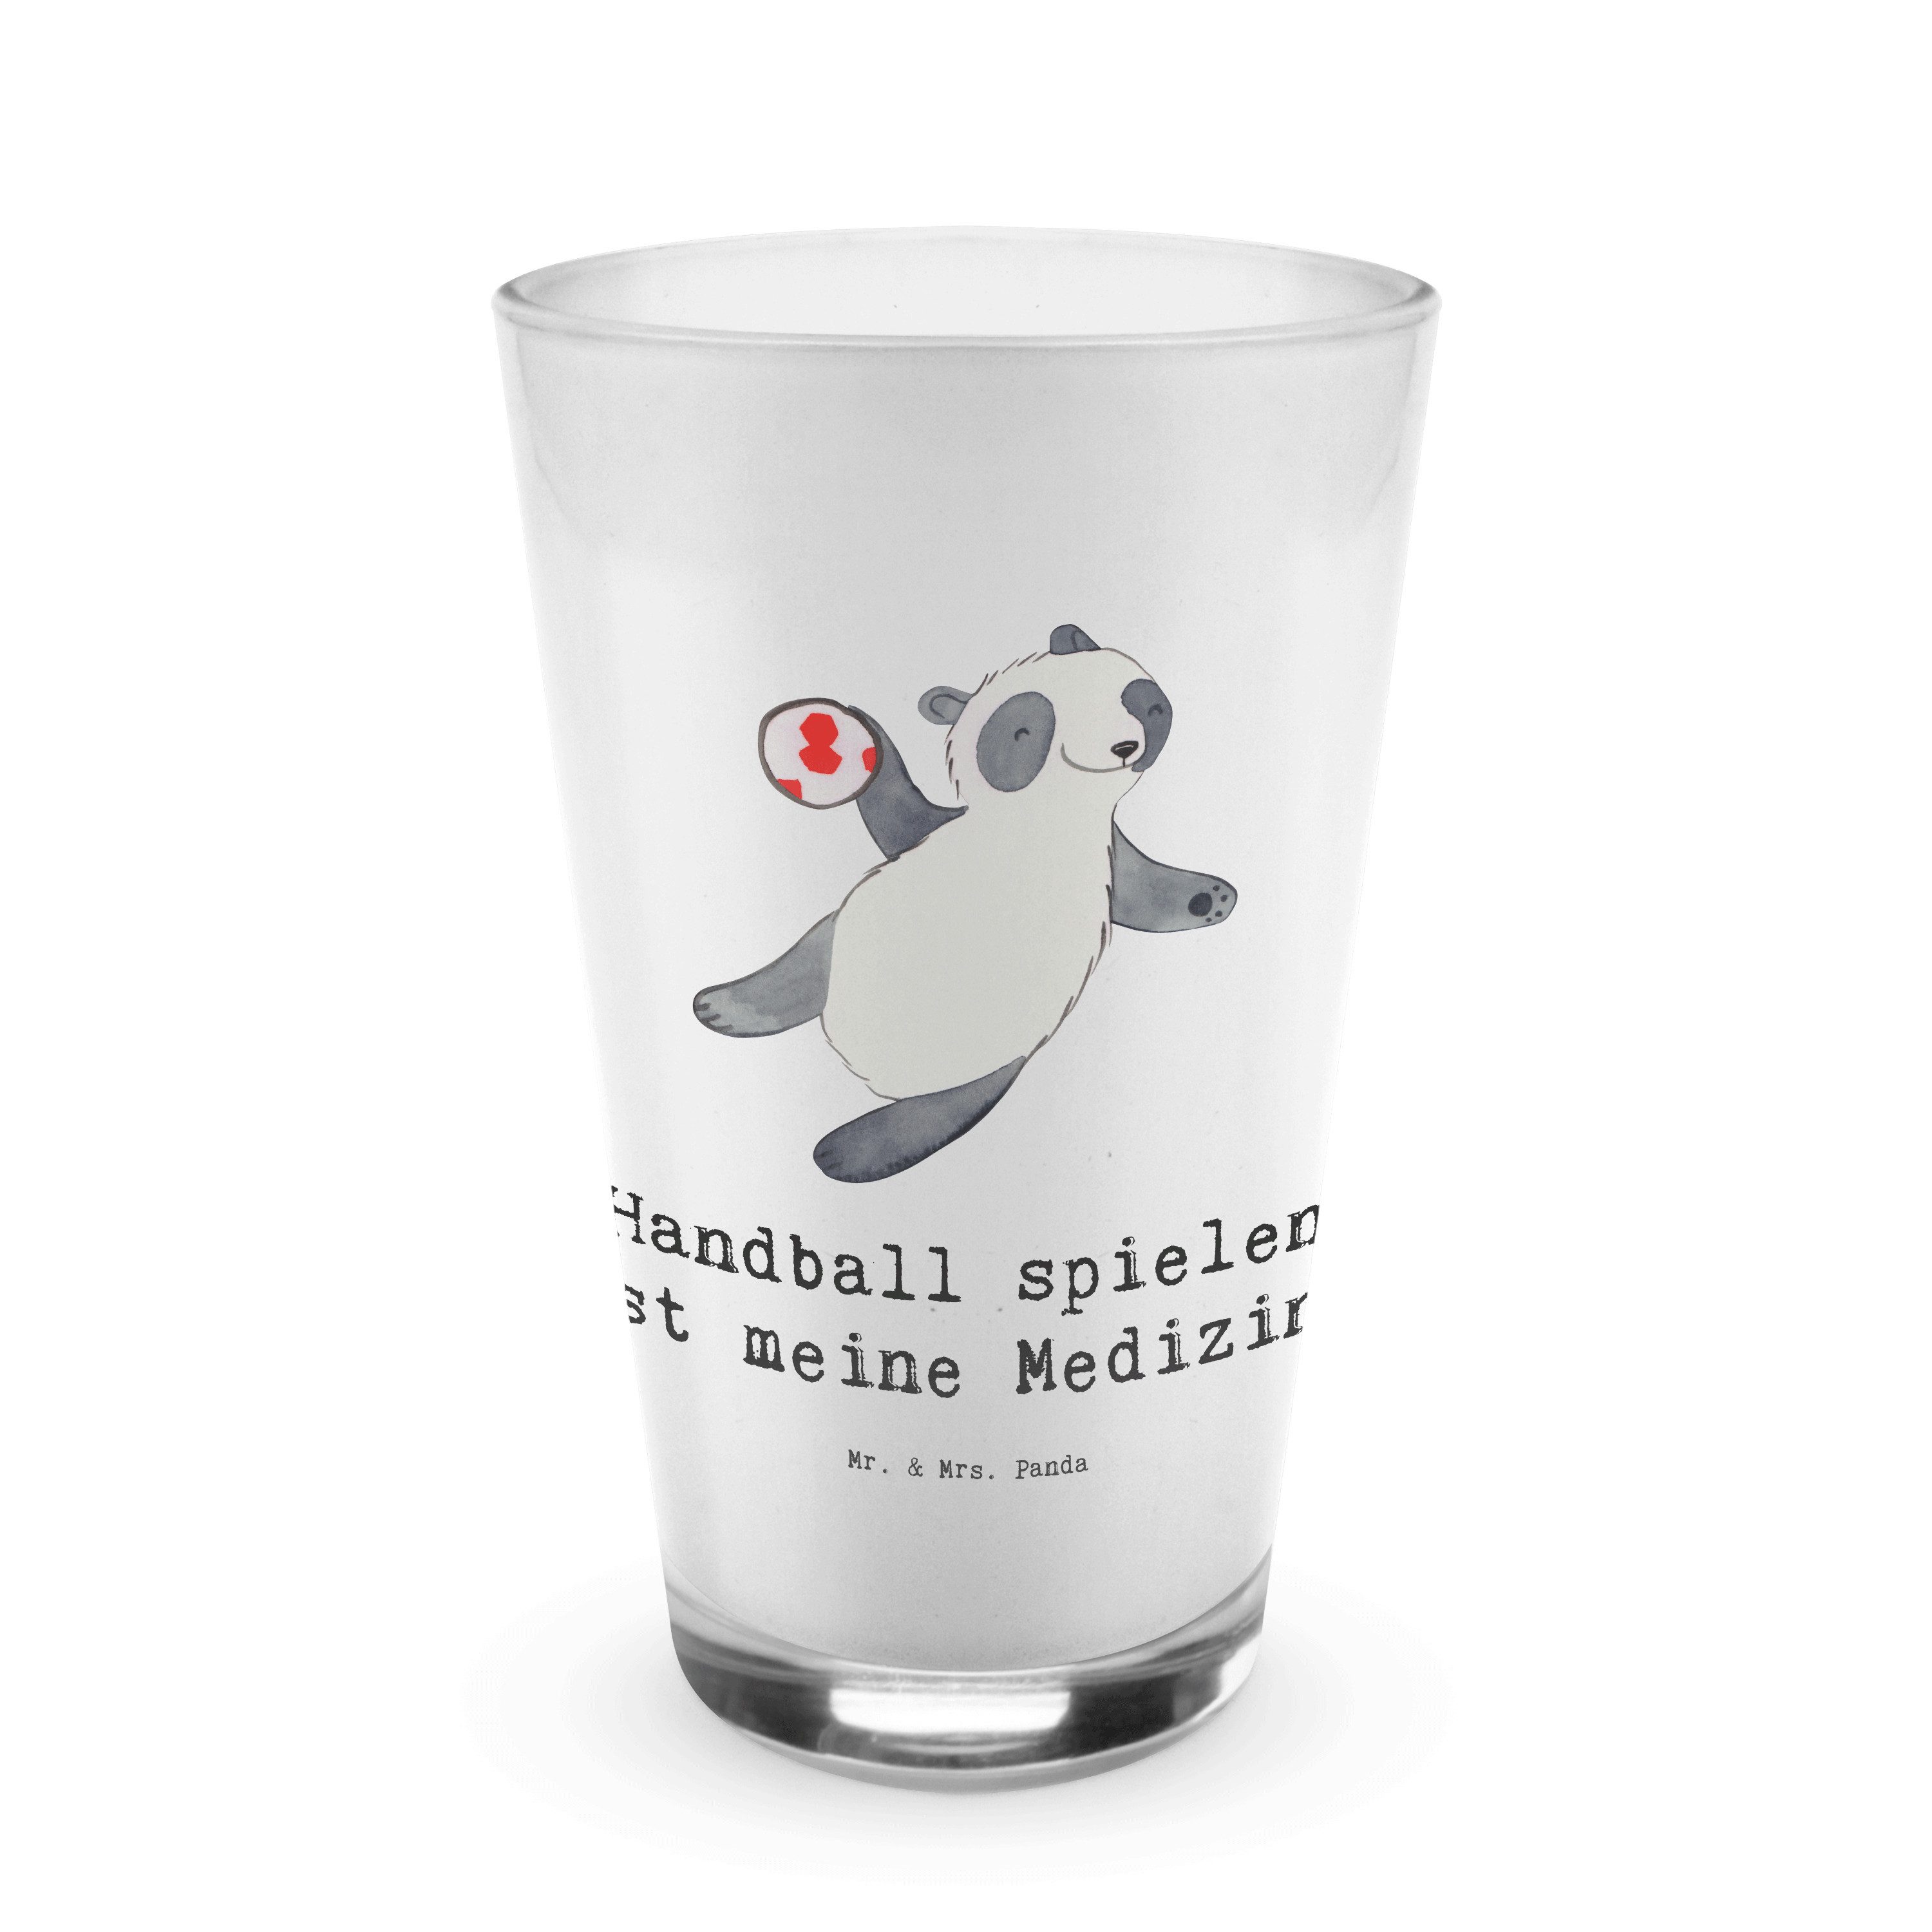 Mr. & Mrs. Panda Glas Panda Handball spielen - Transparent - Geschenk, Danke, Handball Club, Premium Glas, Edles Matt-Design